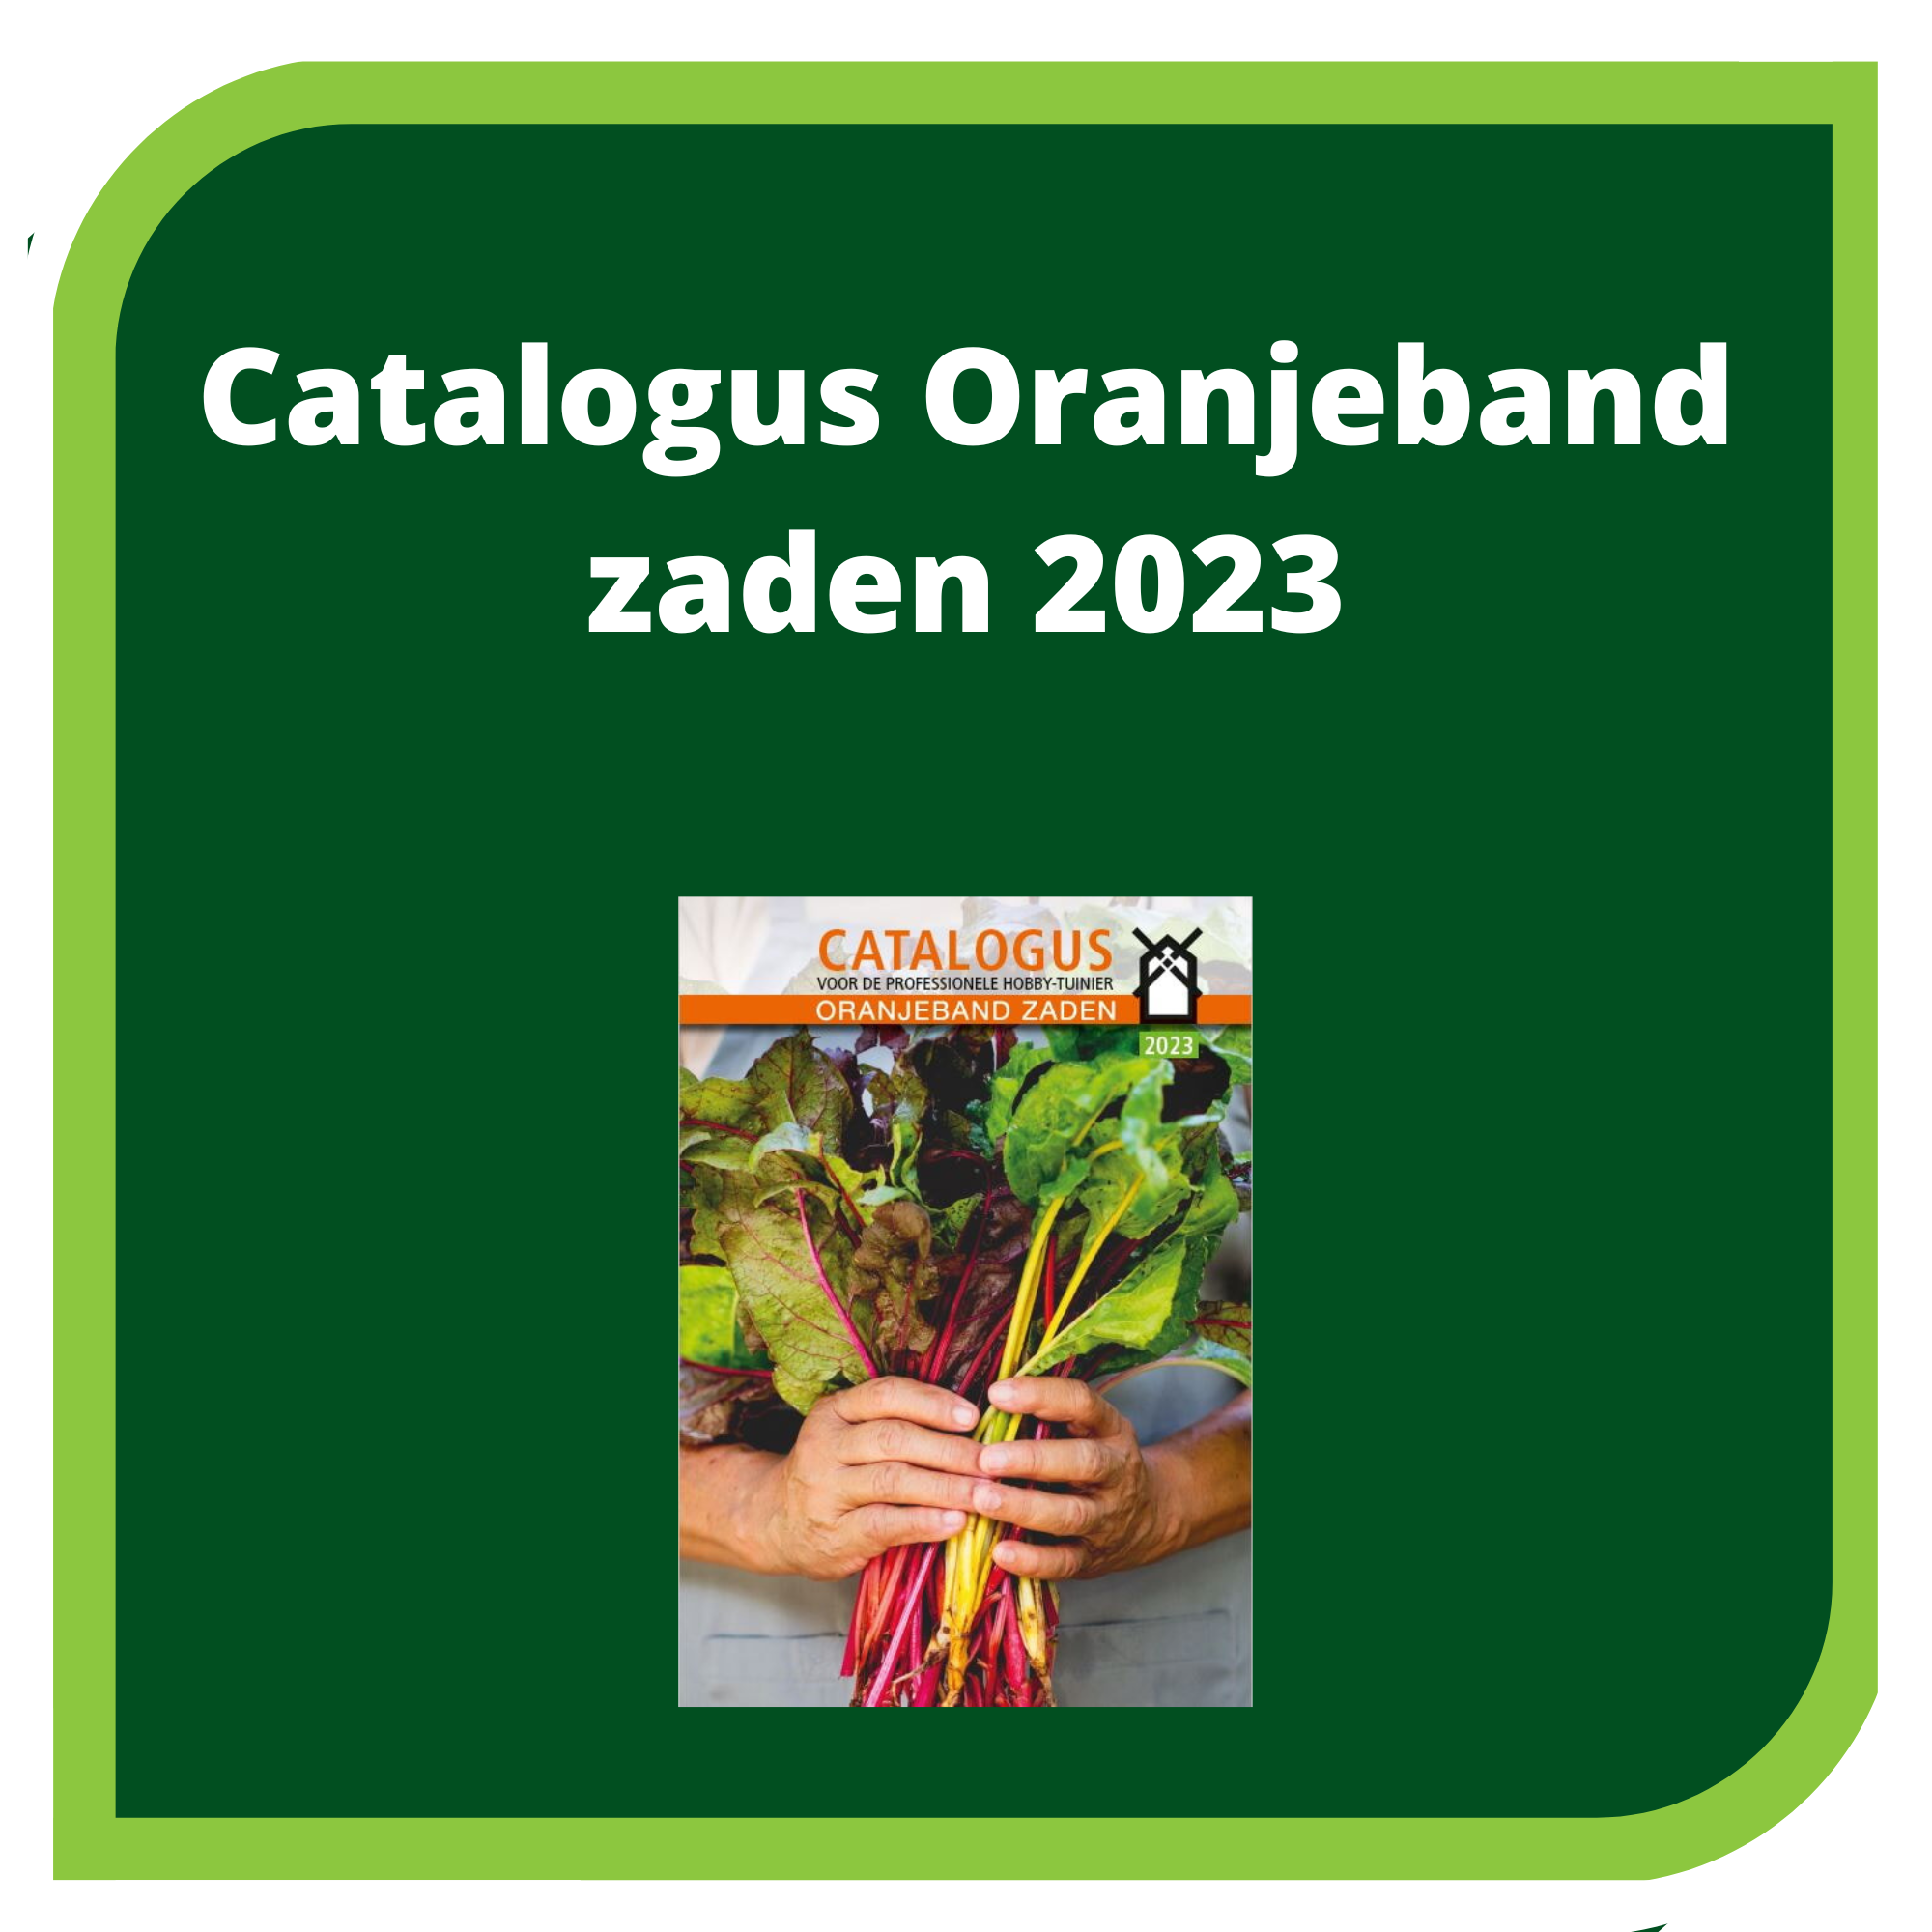 Oranjeband catalogus 2023